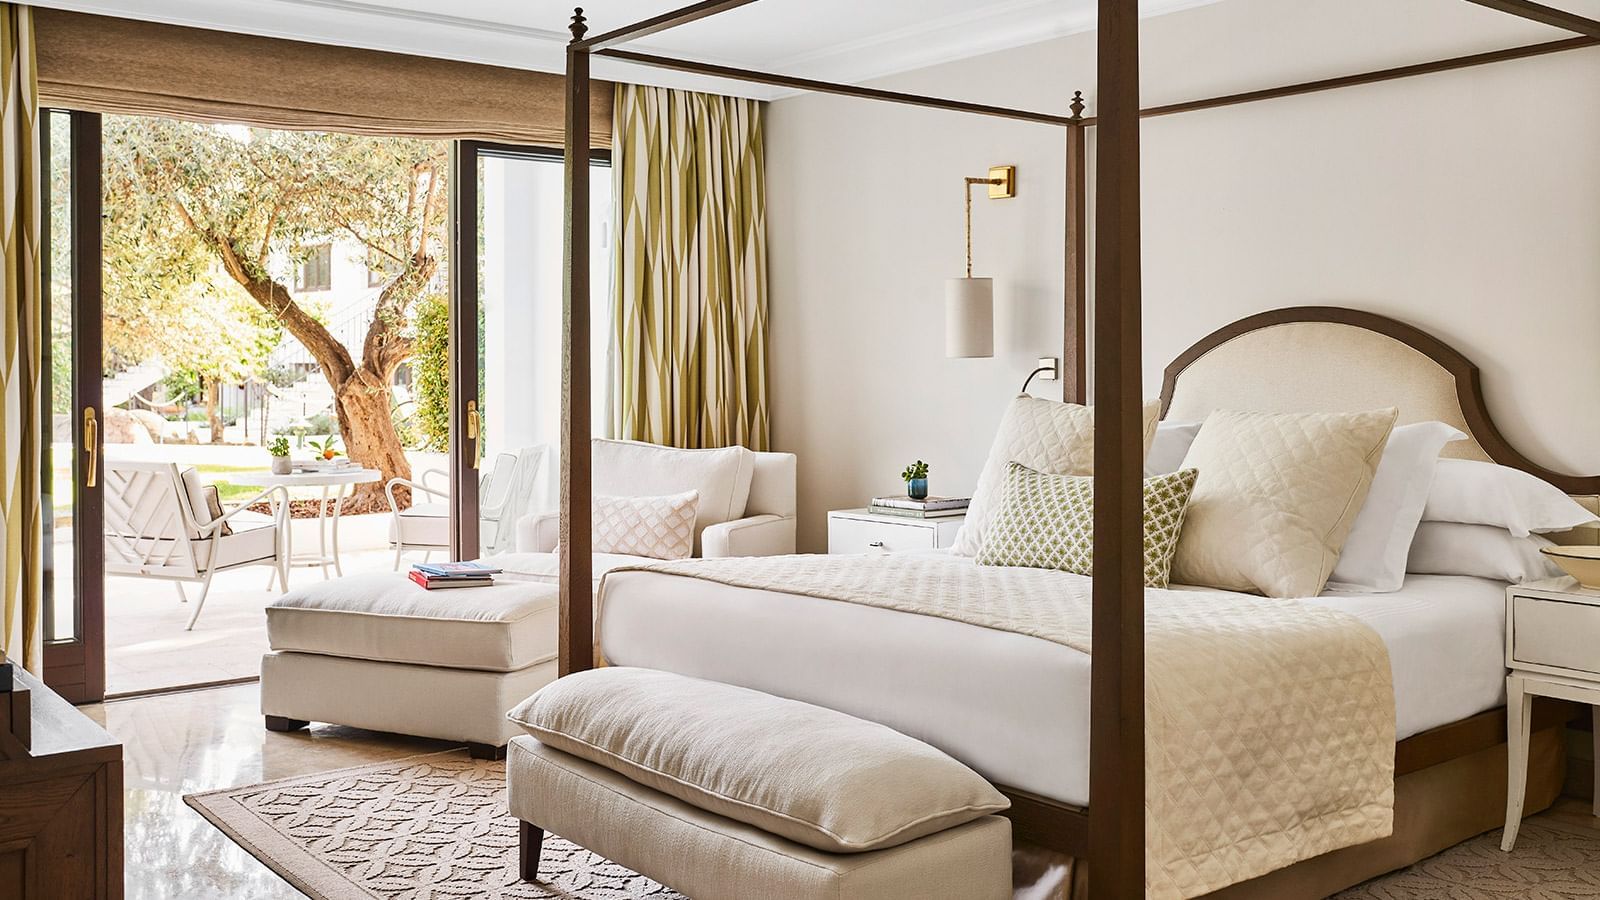 Bed & furniture in a Junior Suite at Marbella Club